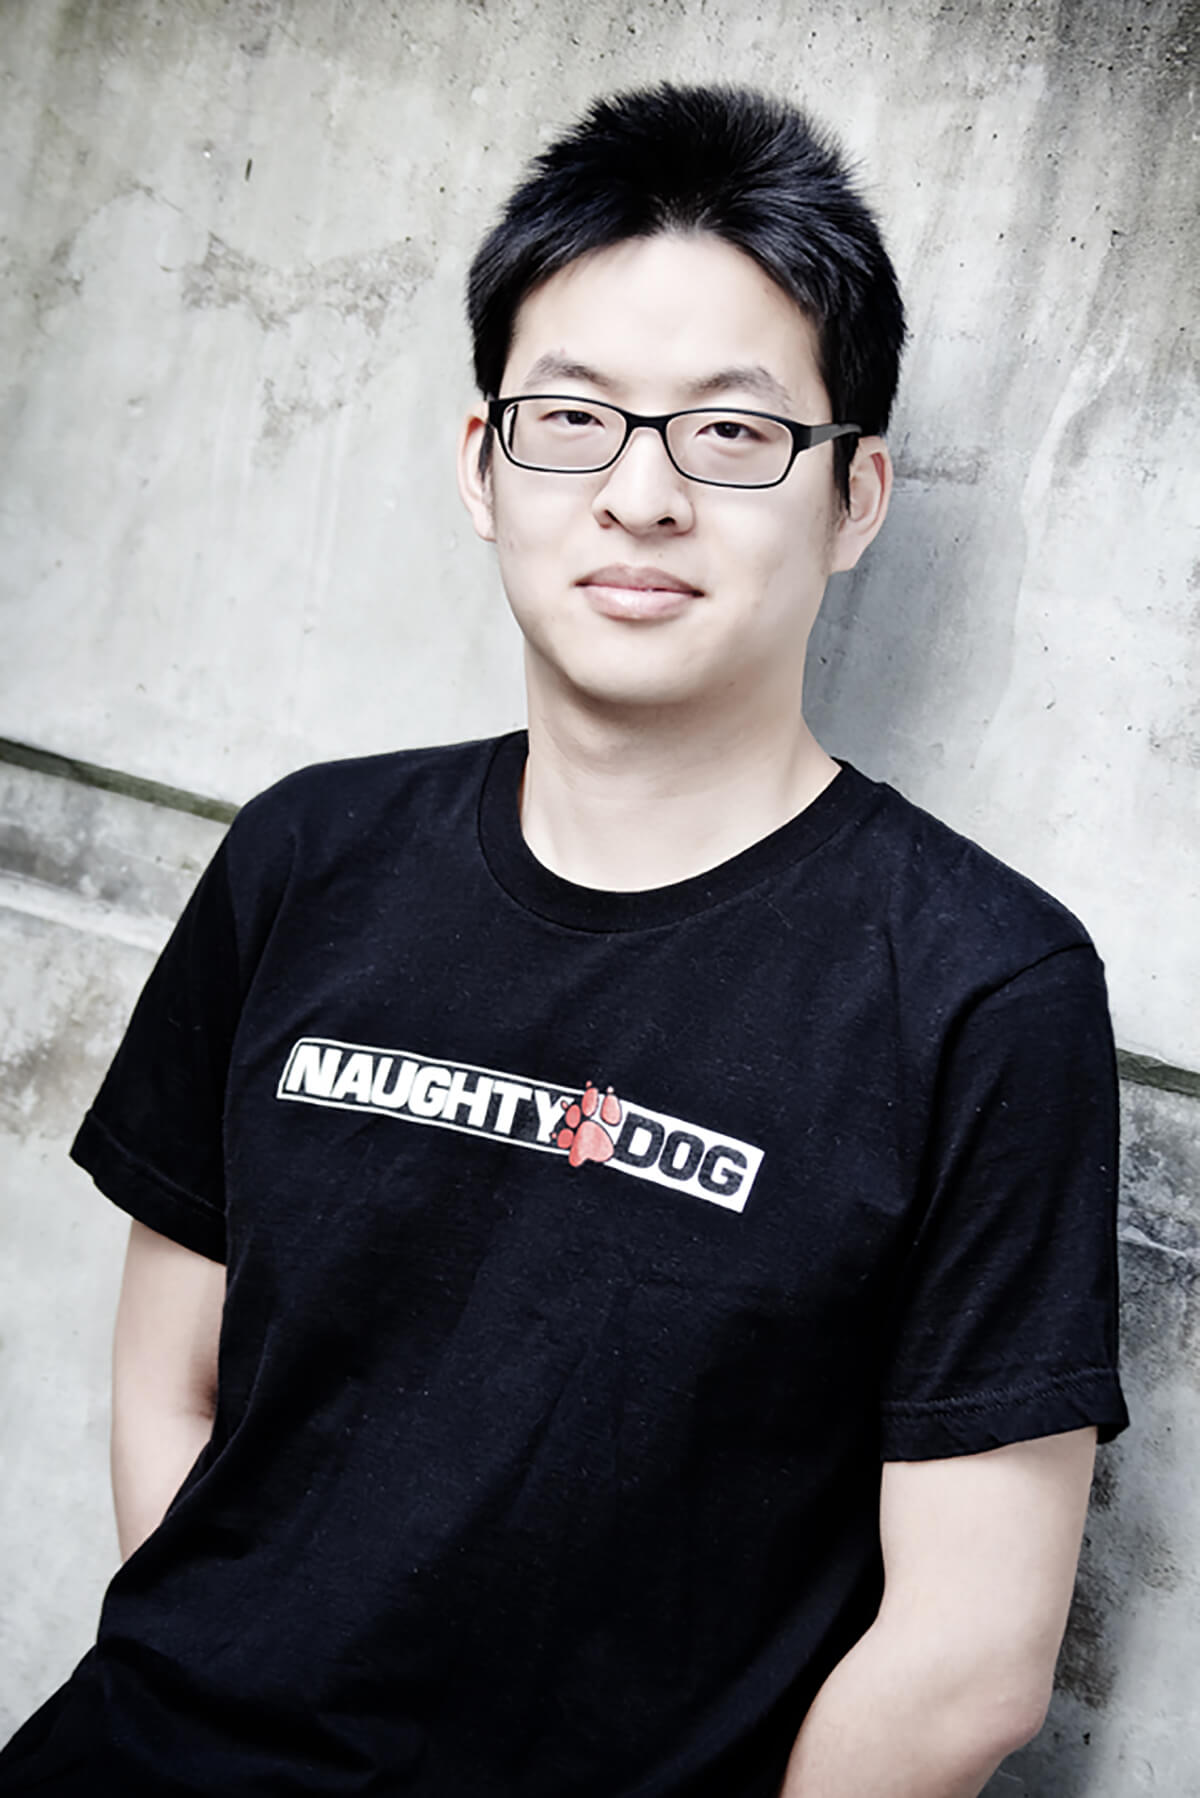 Ming-Lun Allen Chou in a Naughty Dog t-shirt